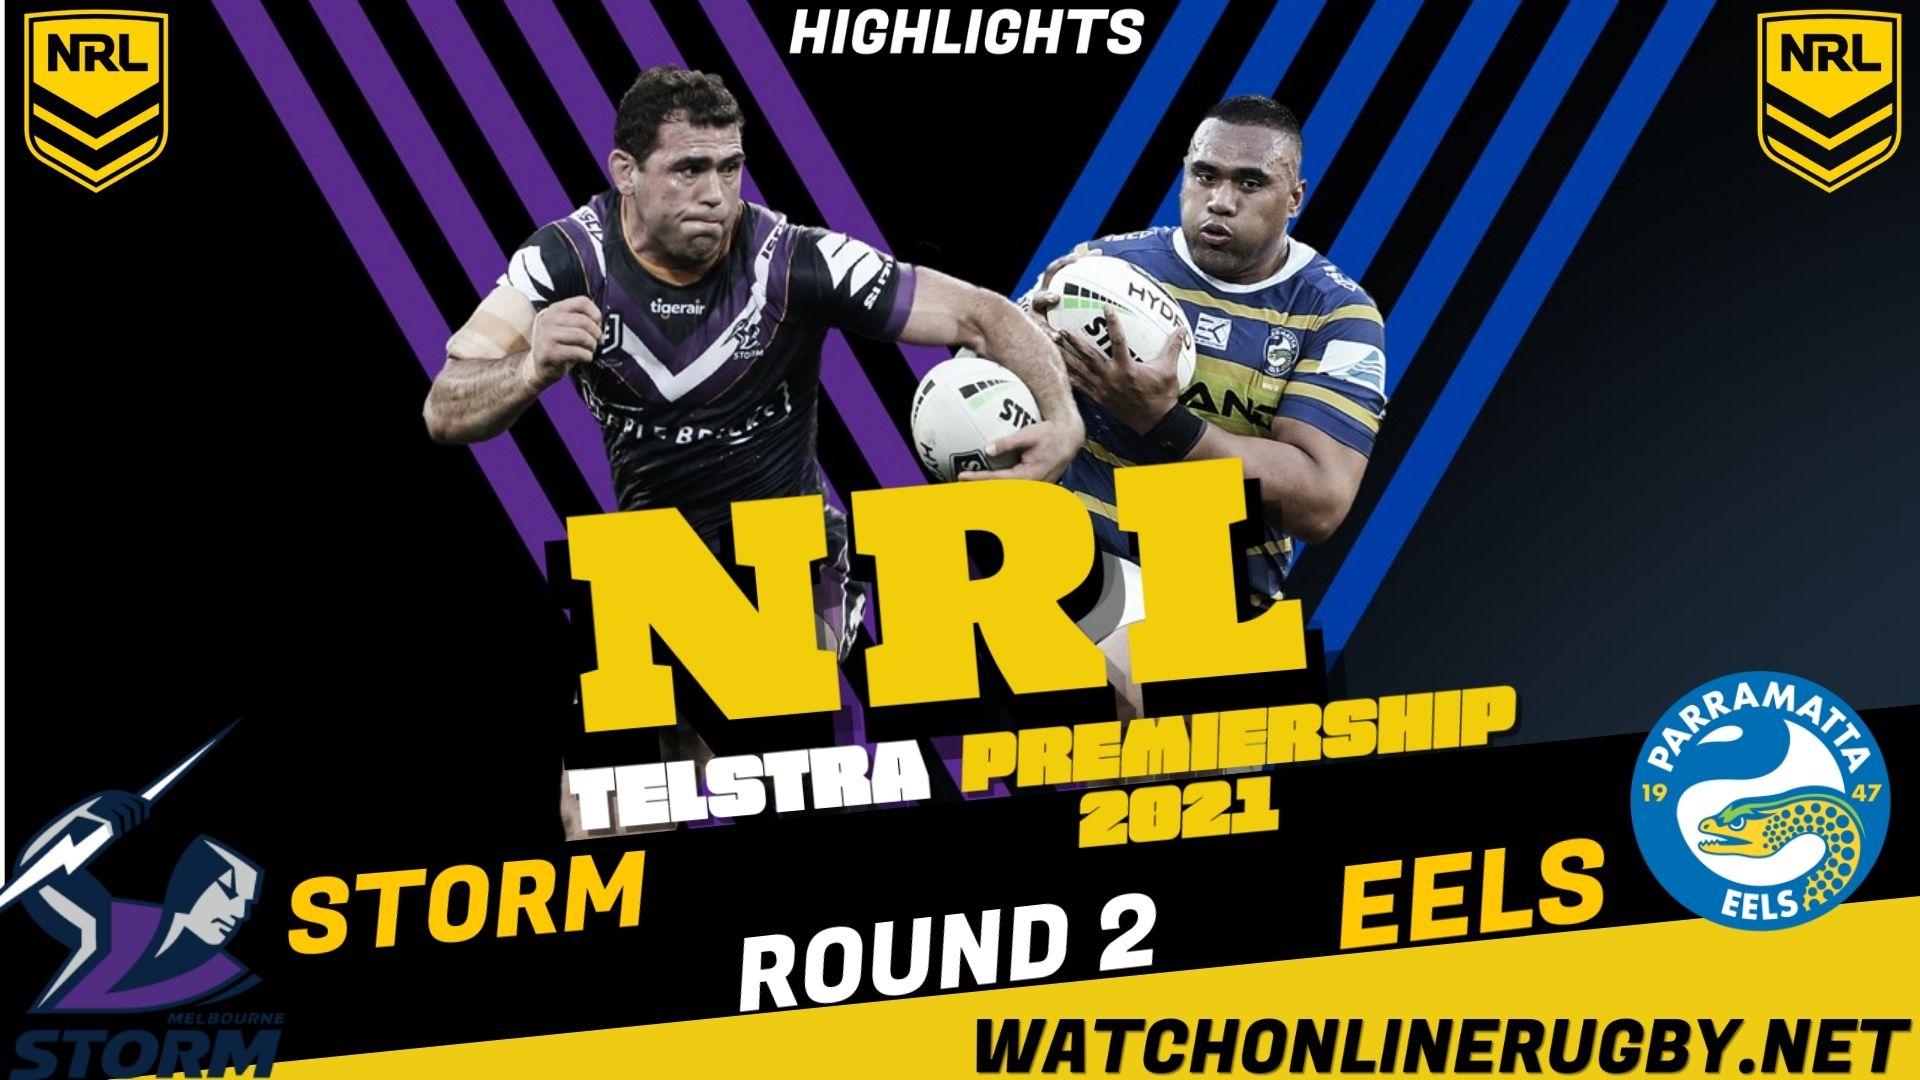 Eels Vs Storm Highlights RD 2 NRL Rugby